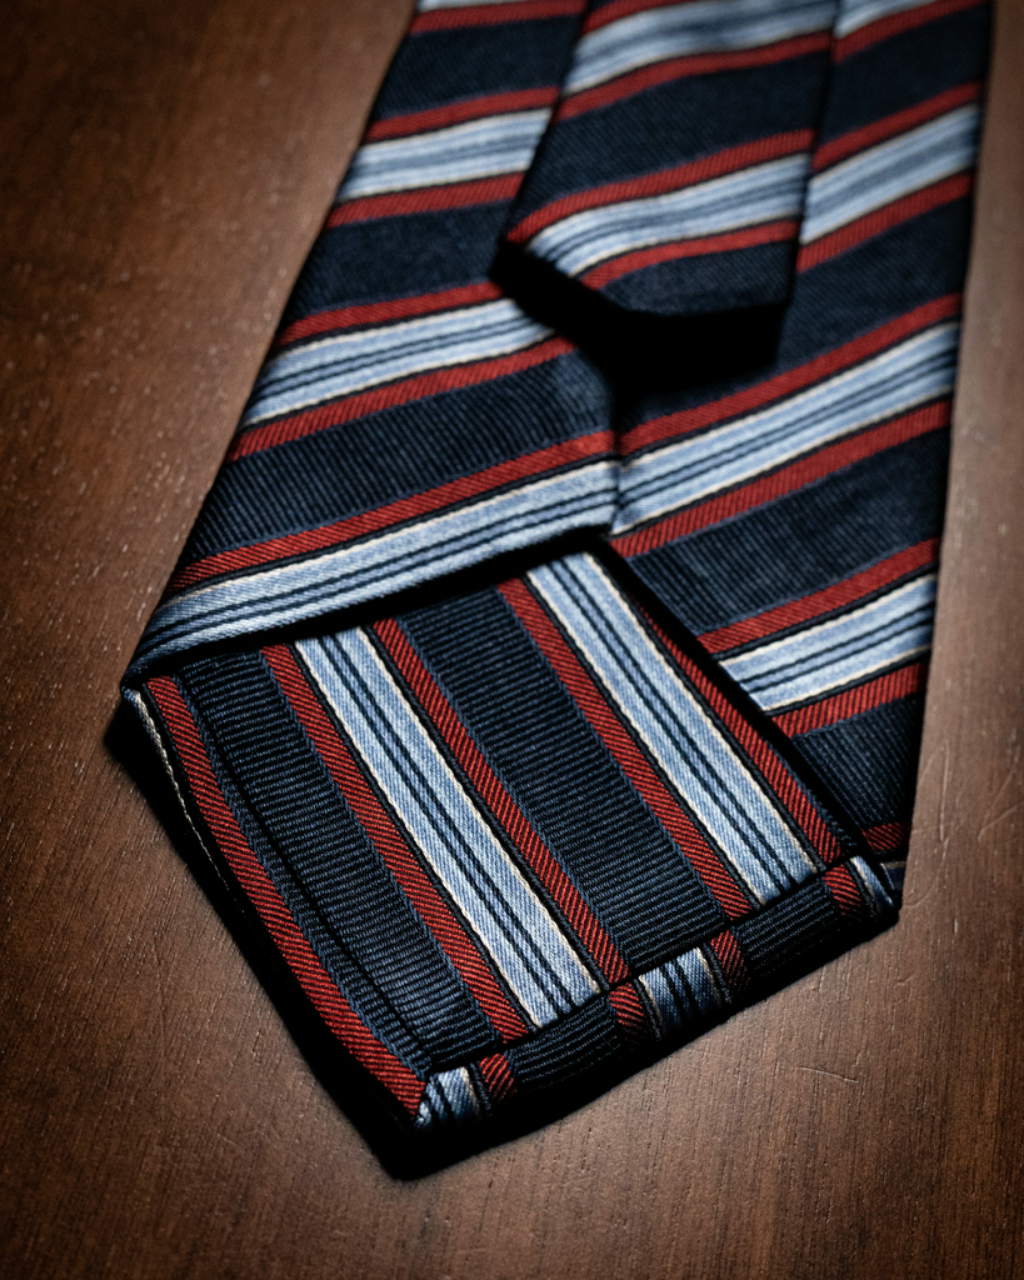 Agostino Blue Tie with Red Regimental Pattern